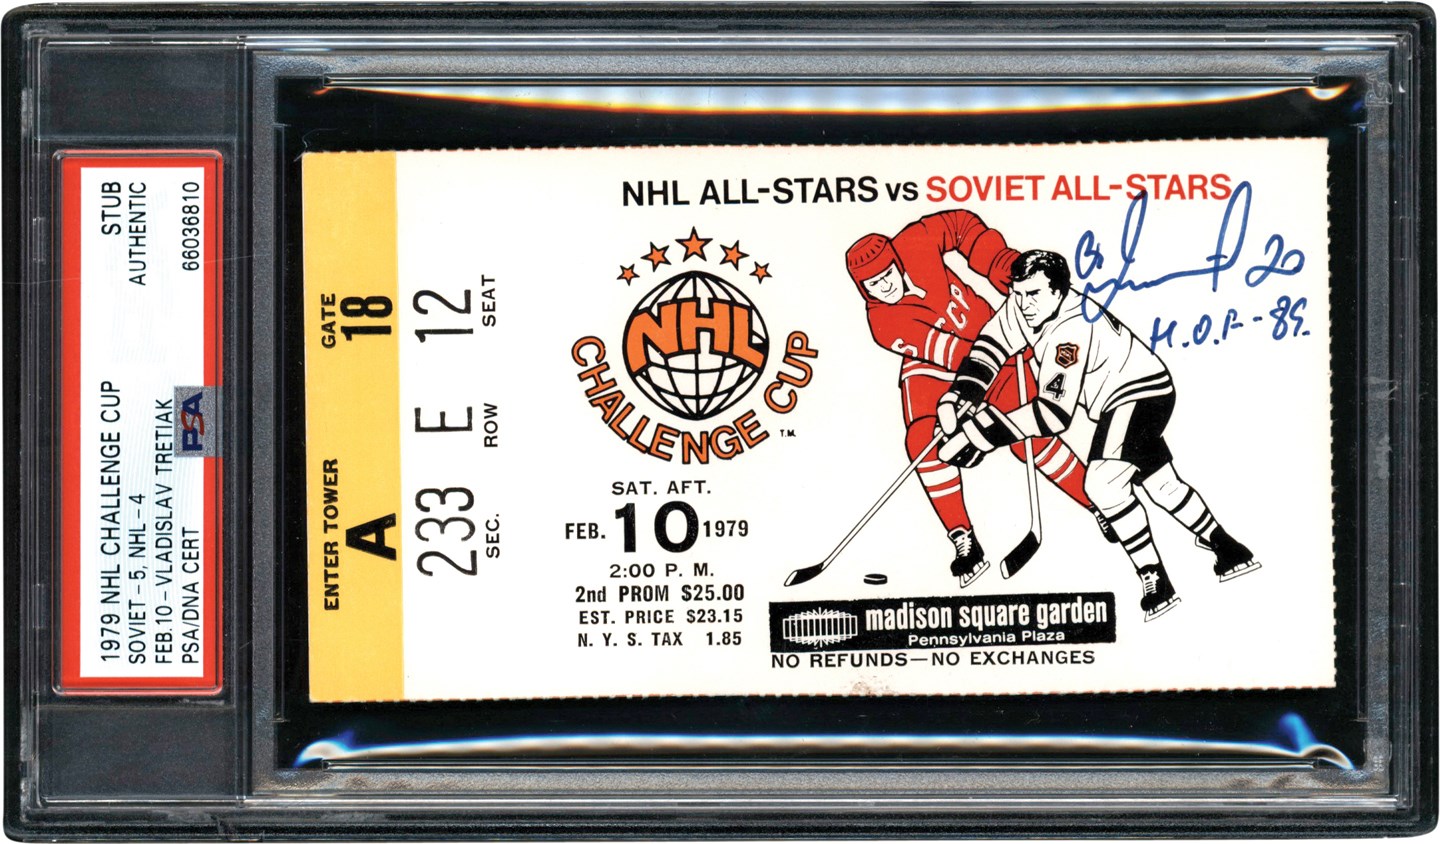 Rare 1979 NHL All-Stars vs Soviet All-Stars Ticket Stub Signed by Vladislav Tretiak PSA Authentic